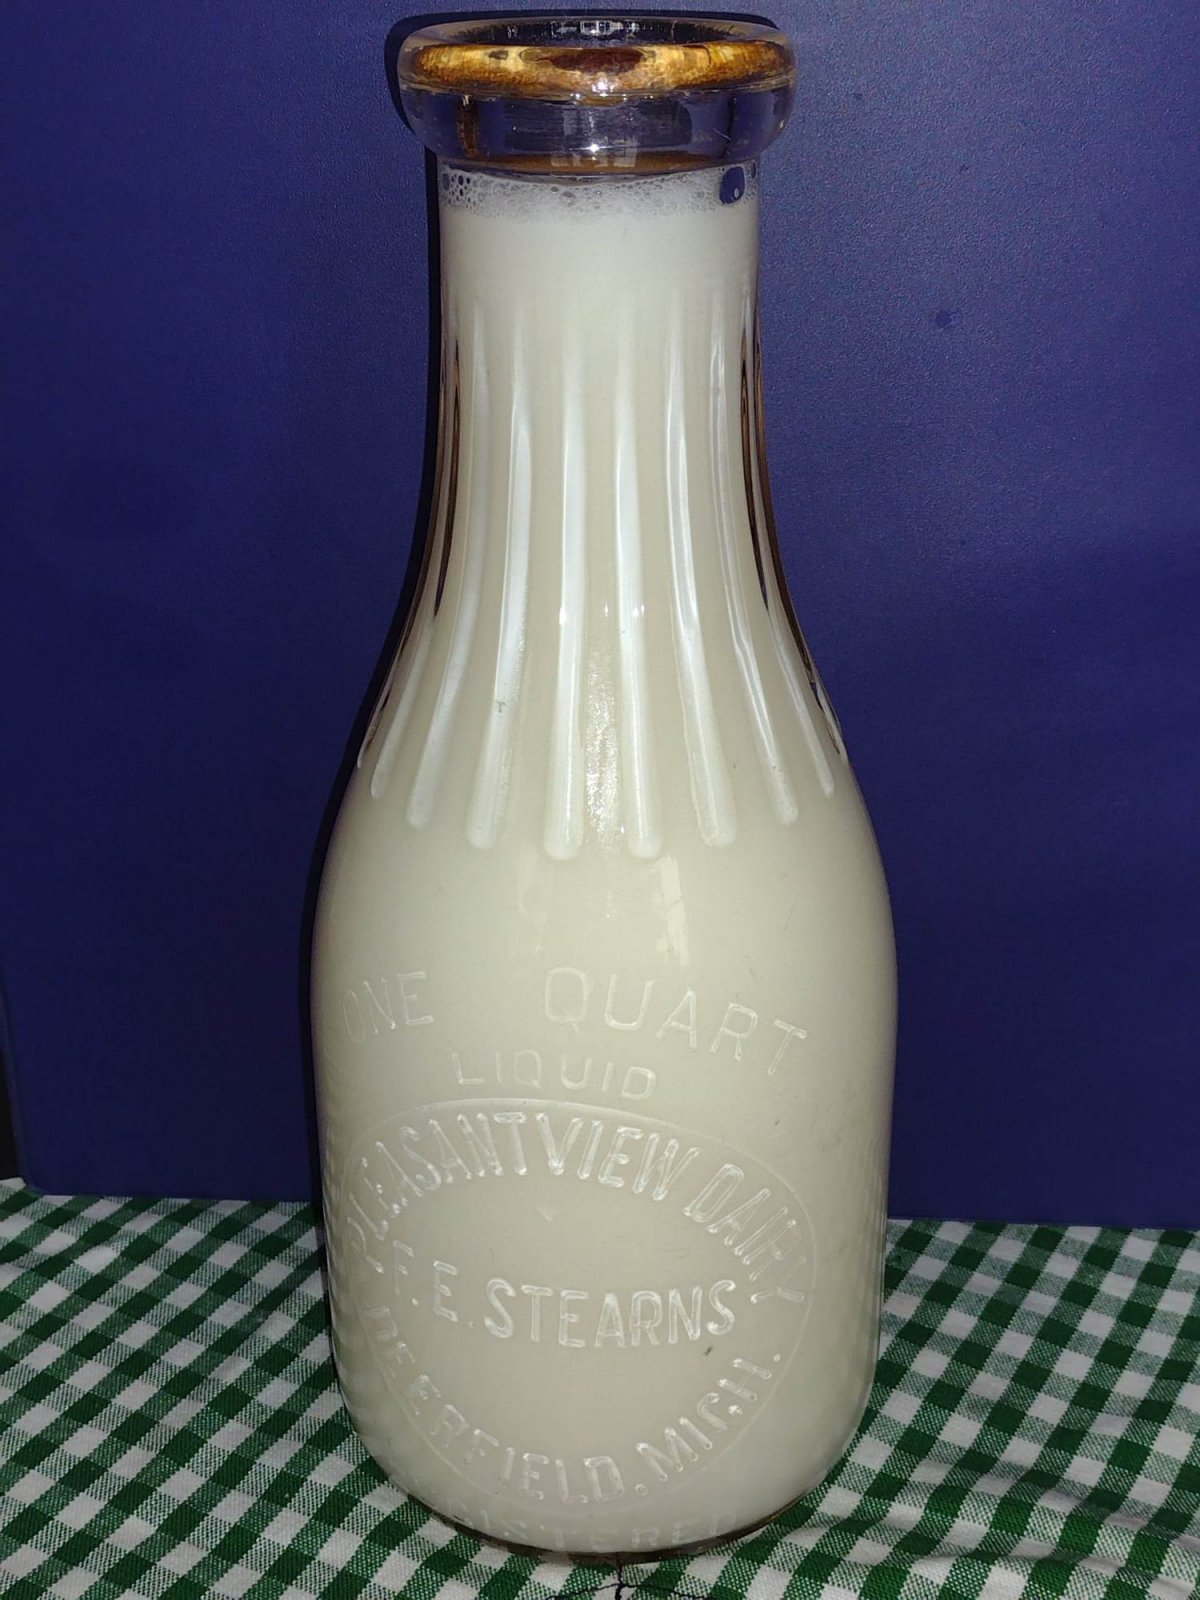 F.E. Stearns Pleasant View Dairy Farm milk bottle image.jpeg